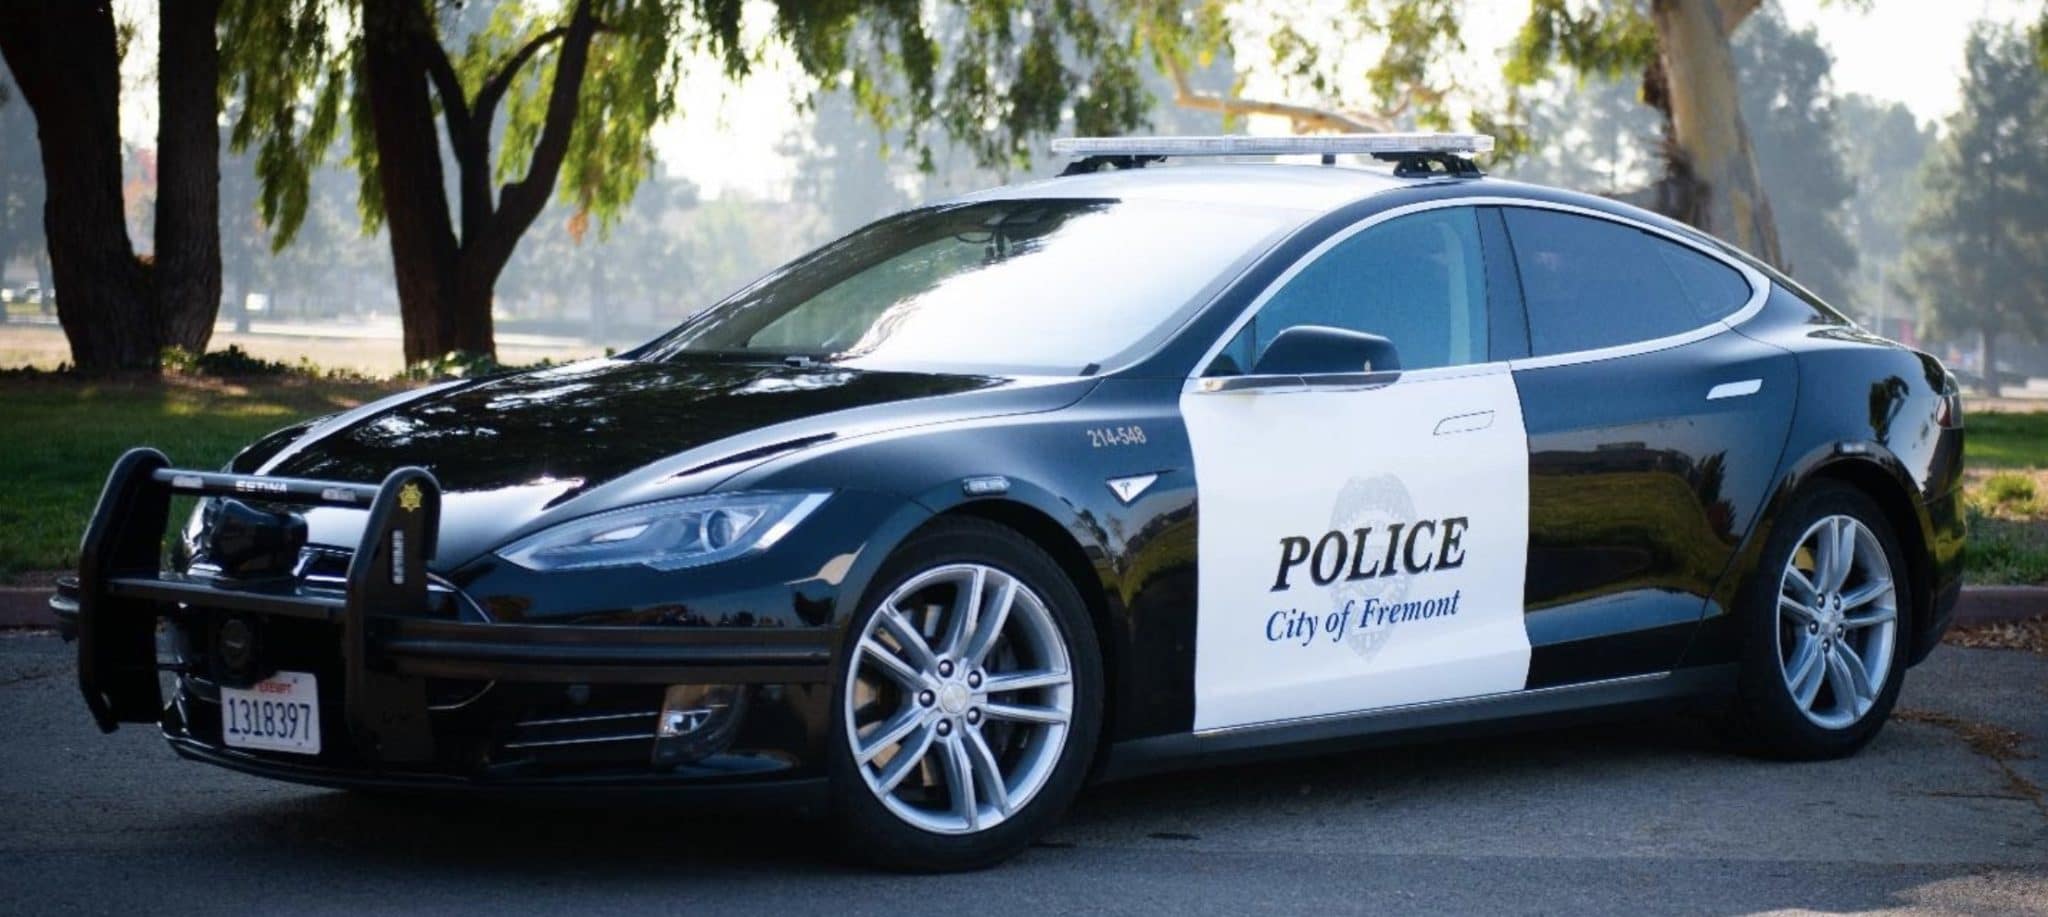 Model S من تيسلا تجتاز اختبار شرطة فريمونت